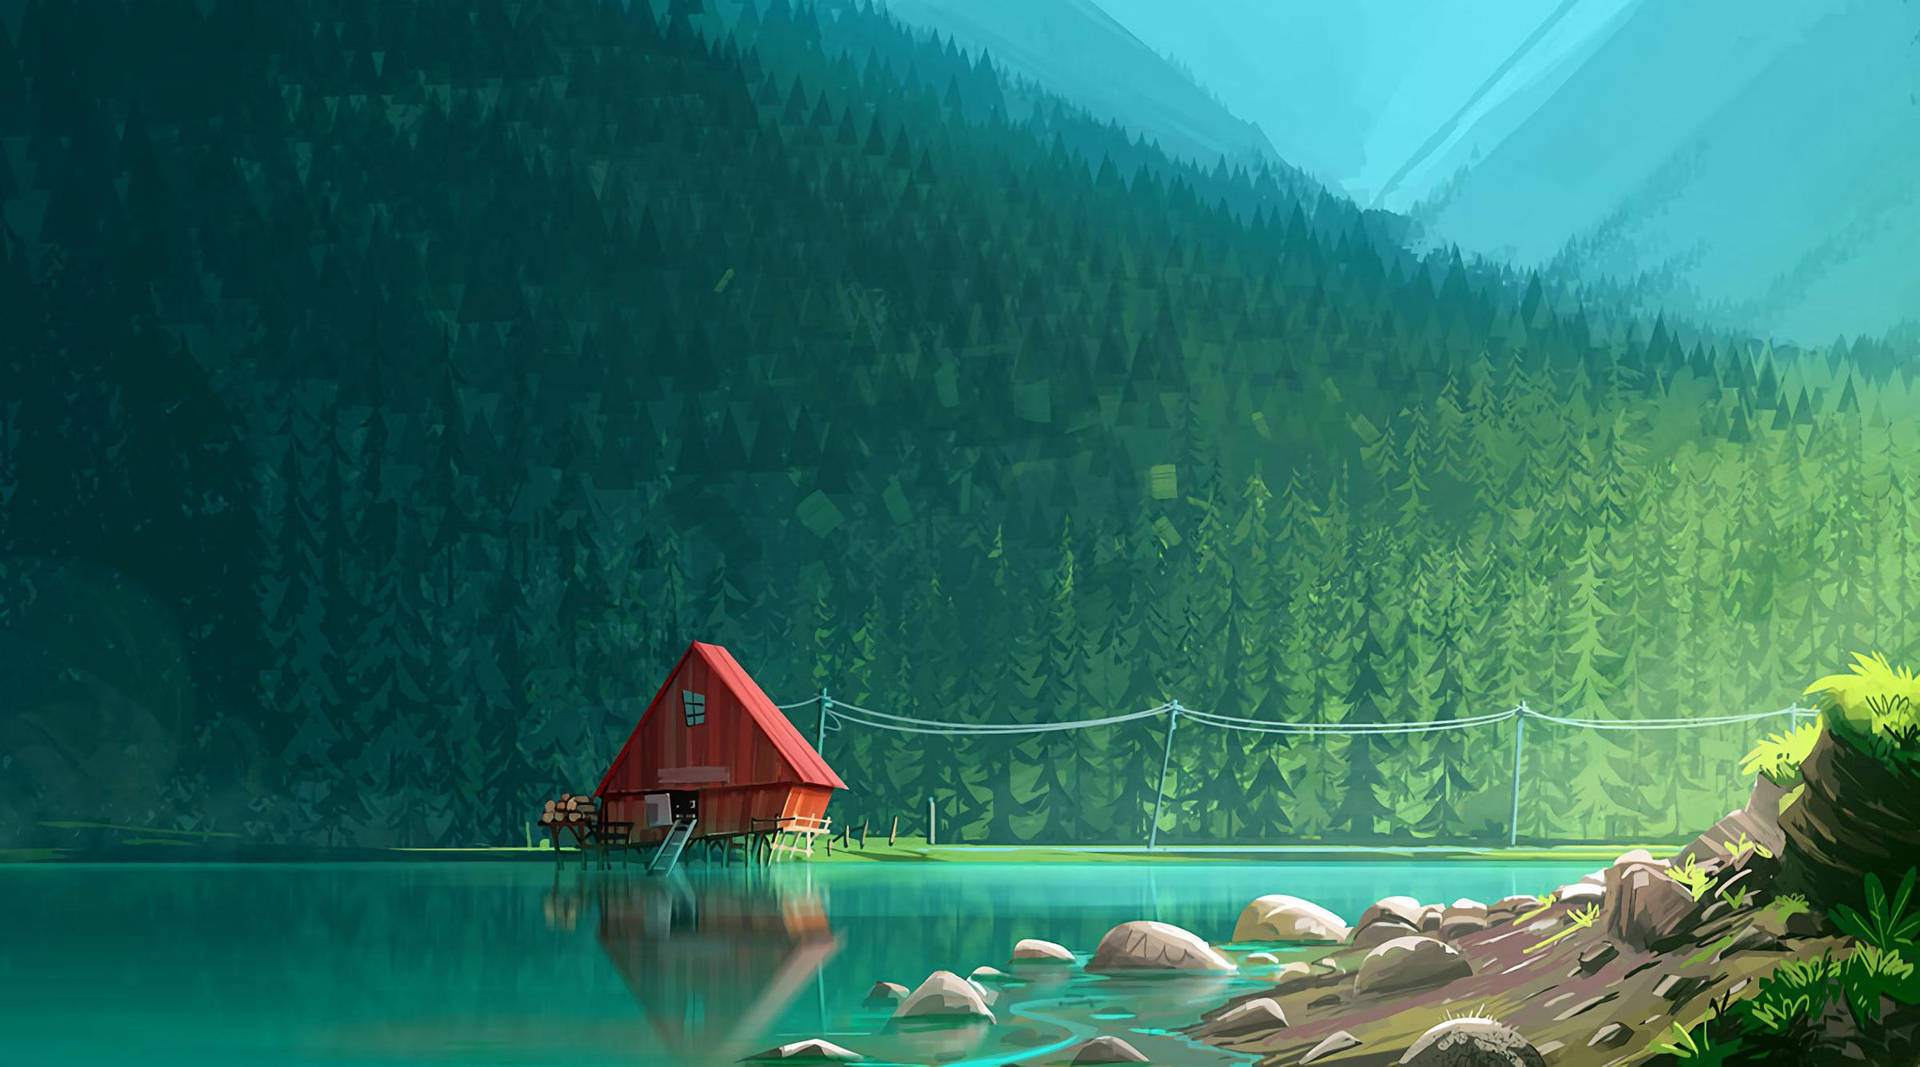 Stunning Digital Lake Cabin Aesthetic Teal Background